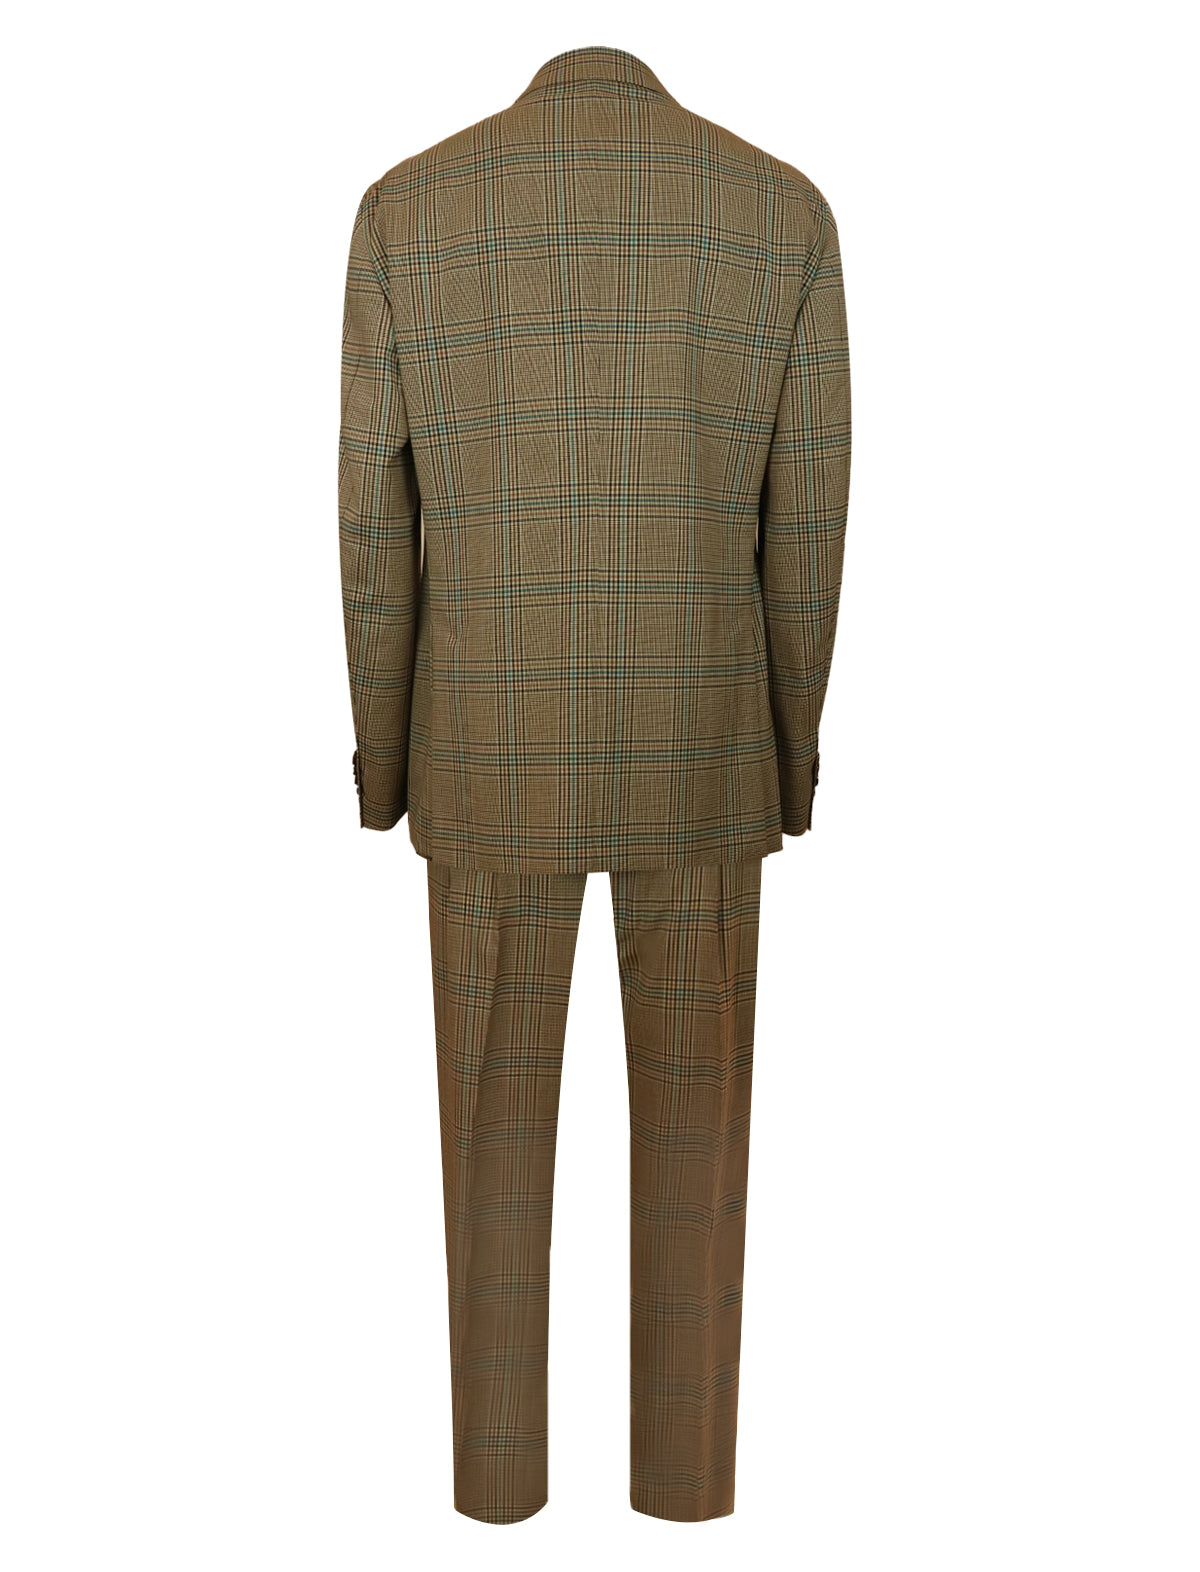 GABRIELE PASINI 2-Piece Plaid Check Suit in Multi/ Brown